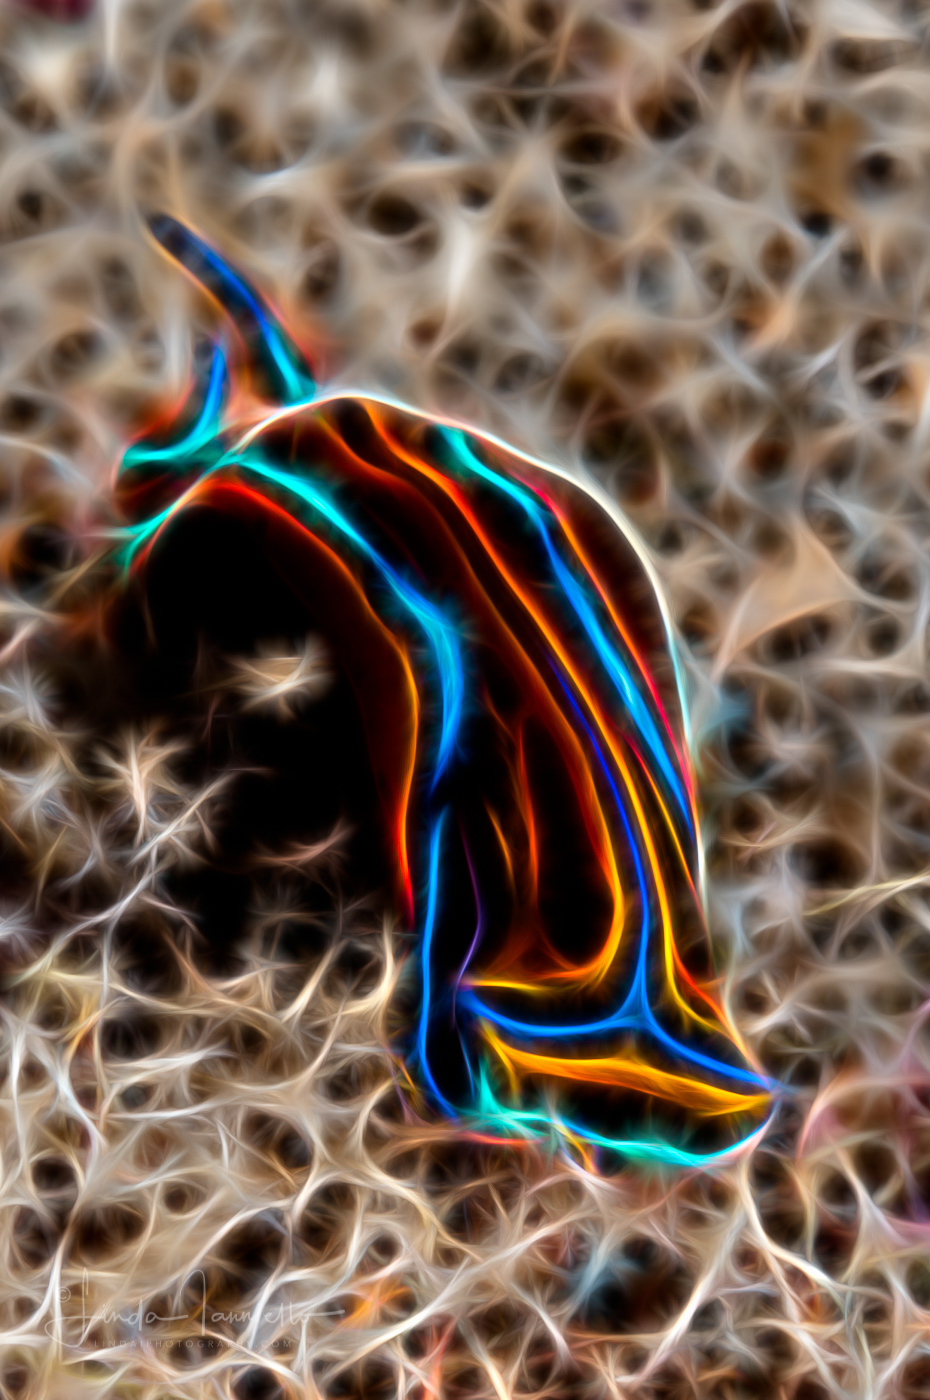 Fractal Art - Chelidonura hirundinina